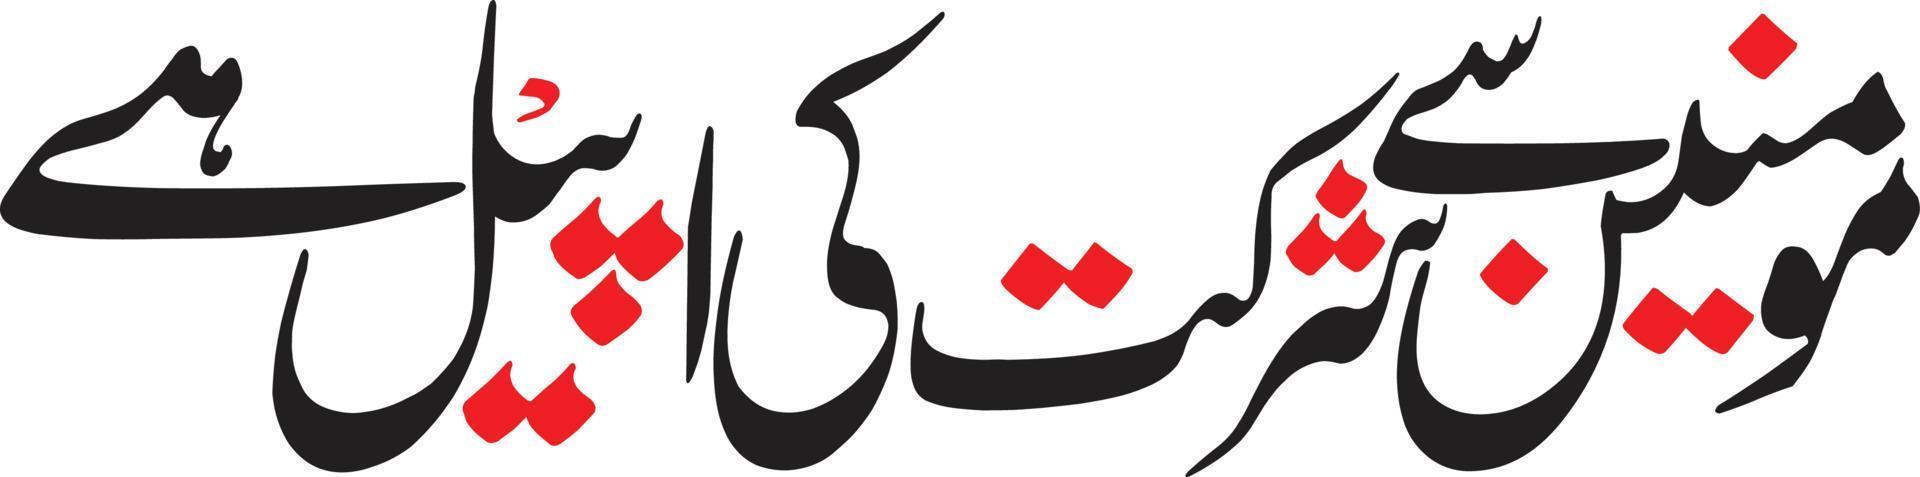 momneen sey sherkat ki apeel hay título islâmico urdu caligrafia árabe vetor grátis